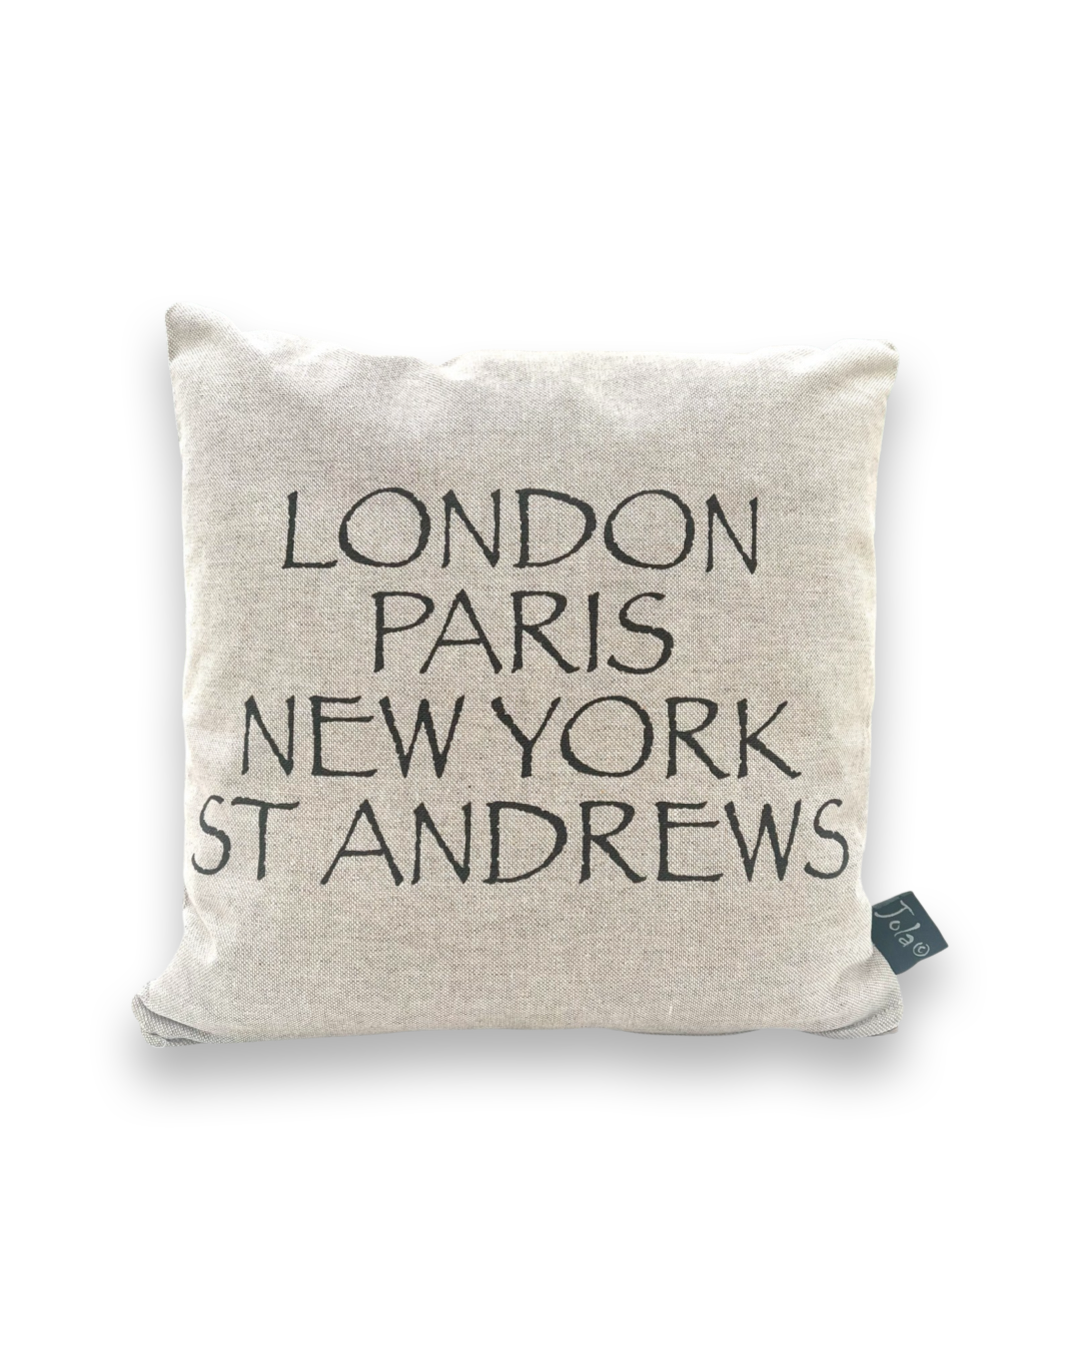 Bespoke London, Paris, New York, St Andrews Cushions